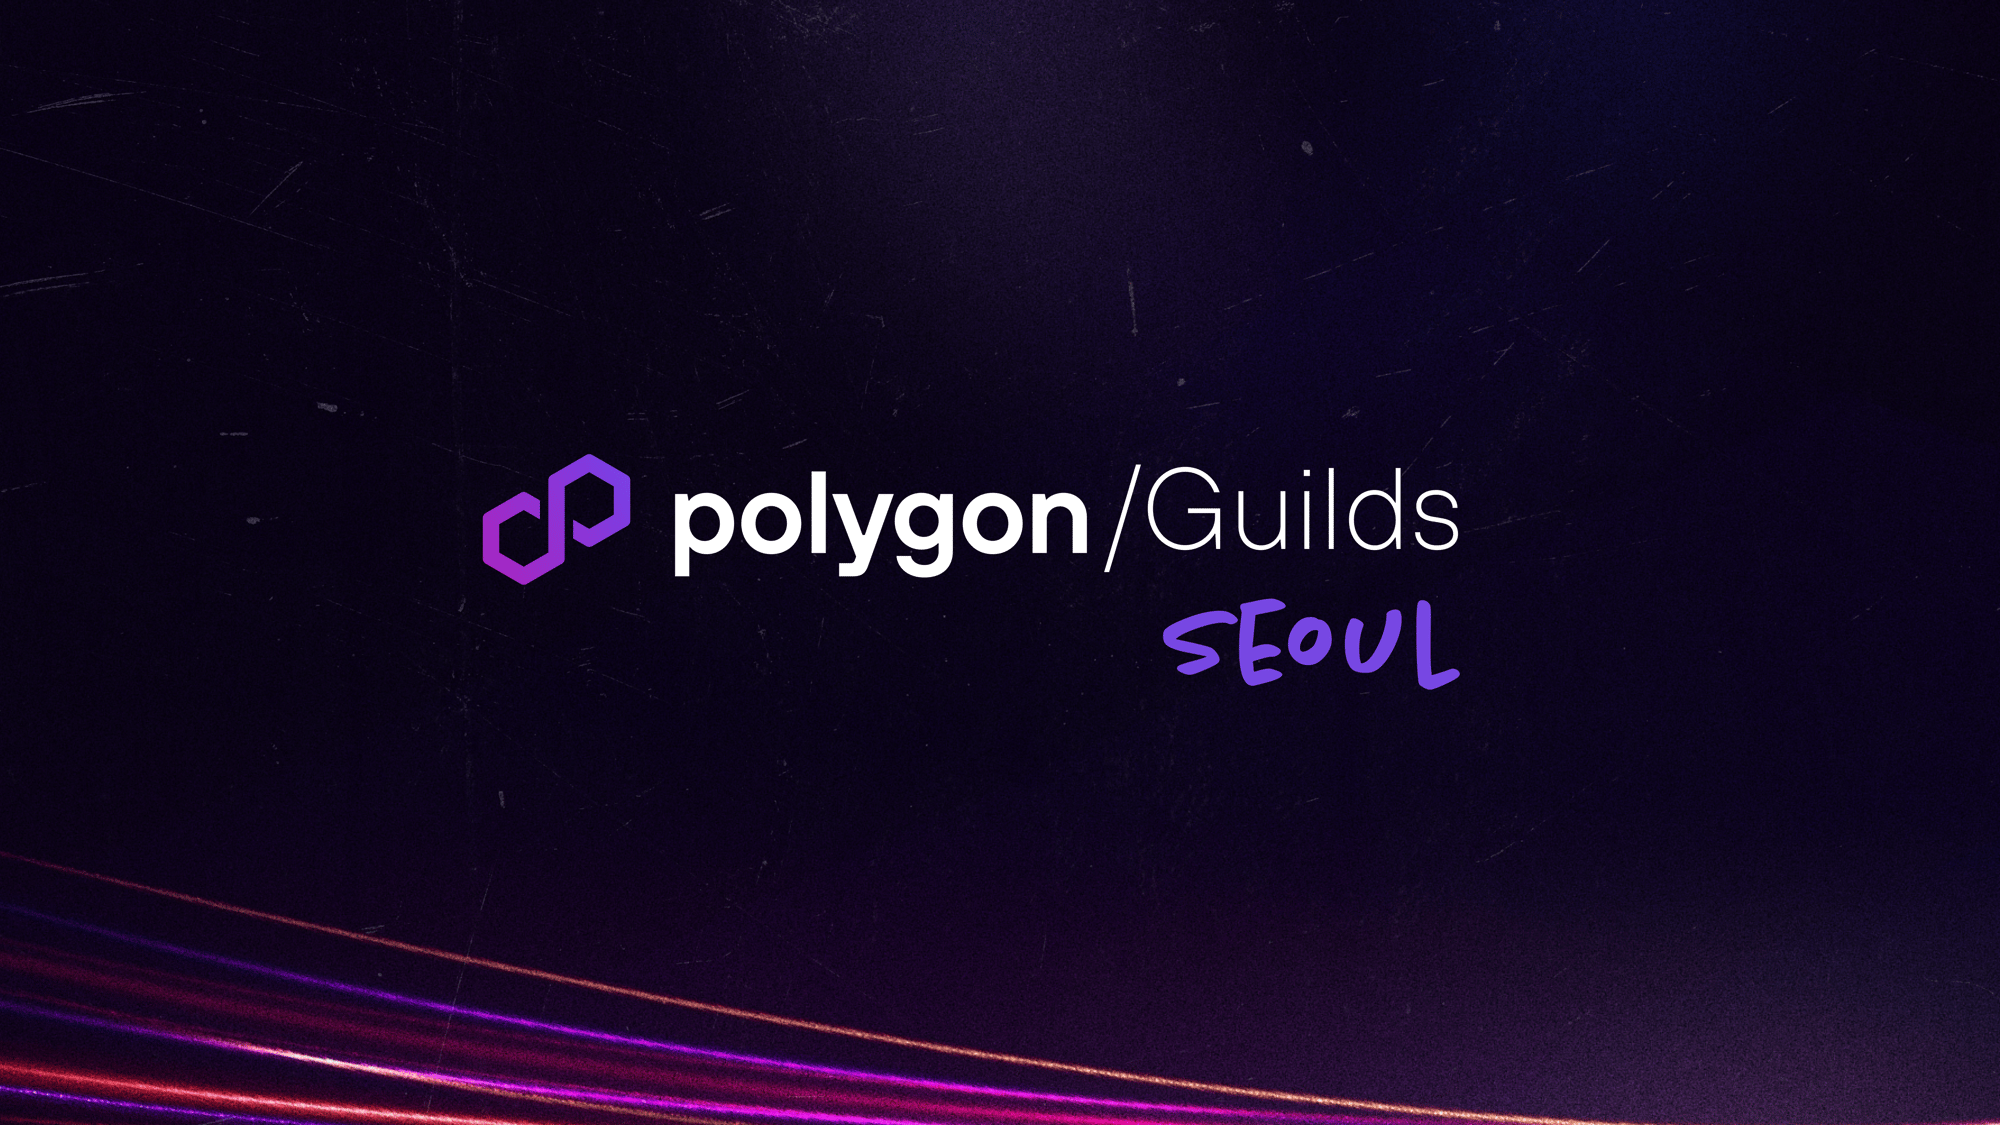 Polygon Seoul Guild